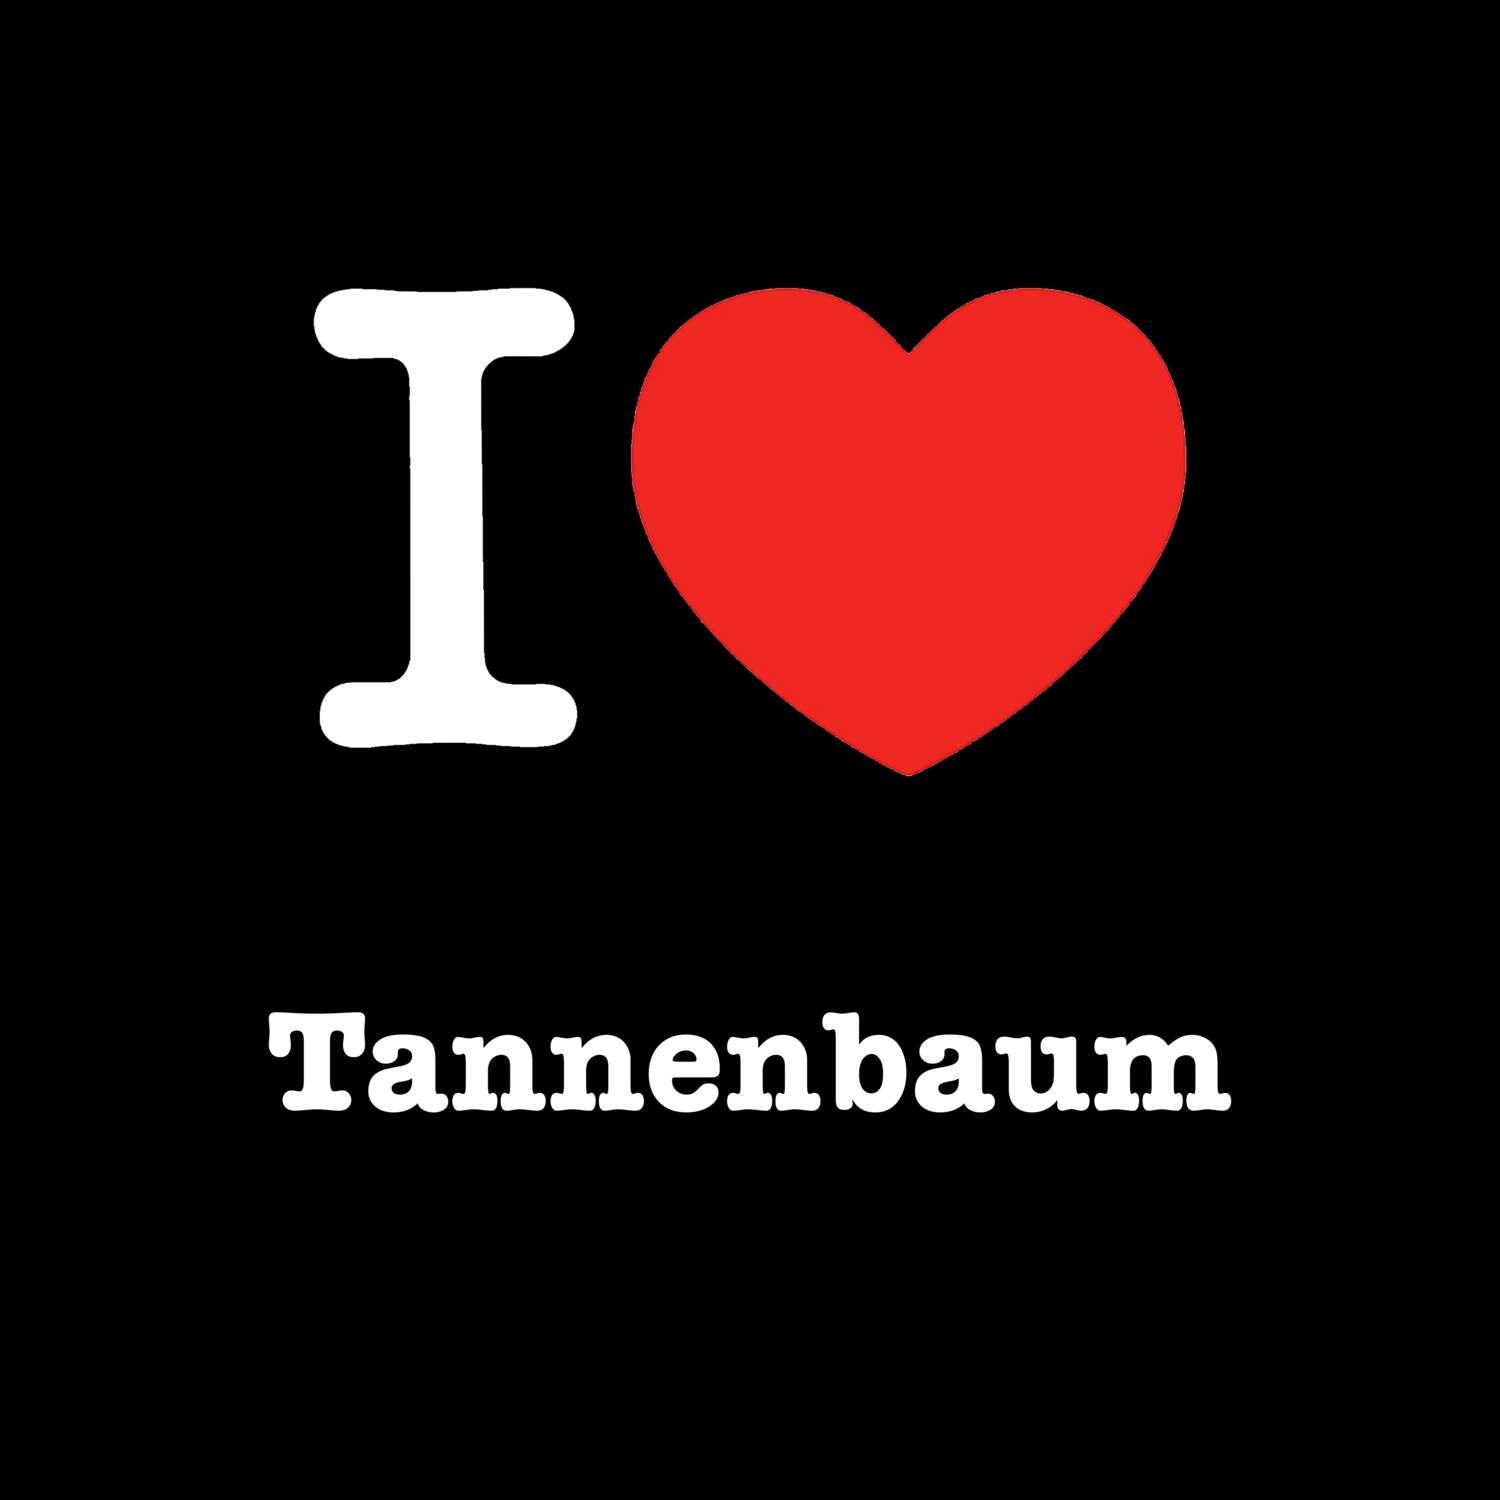 Tannenbaum T-Shirt »I love«